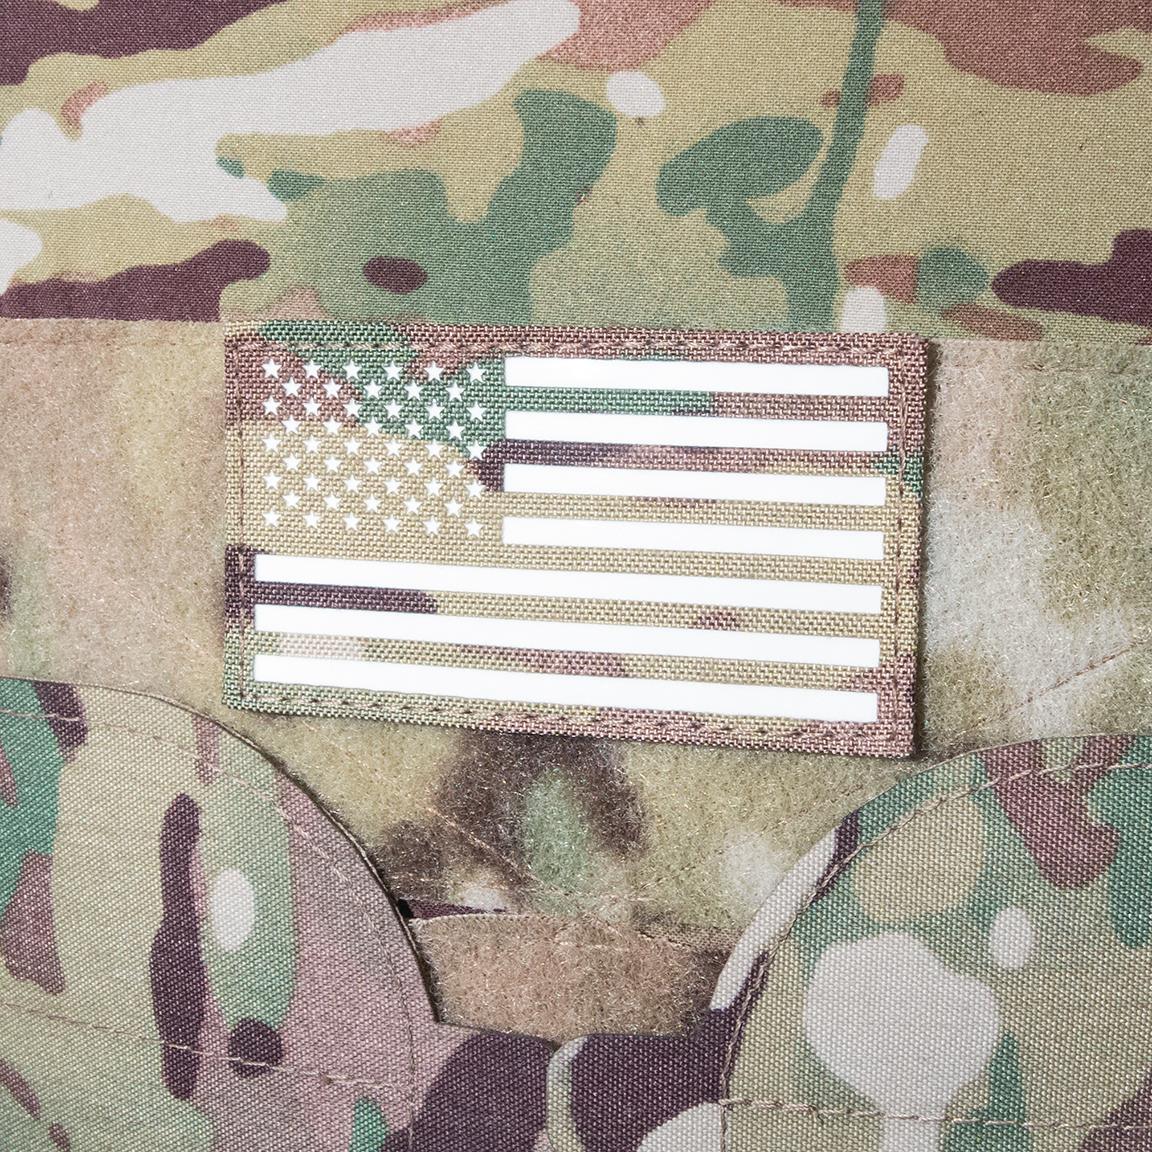 American Flag Patch - 3-1/2 x 2-1/8 Left Shoulder w/Gold Border